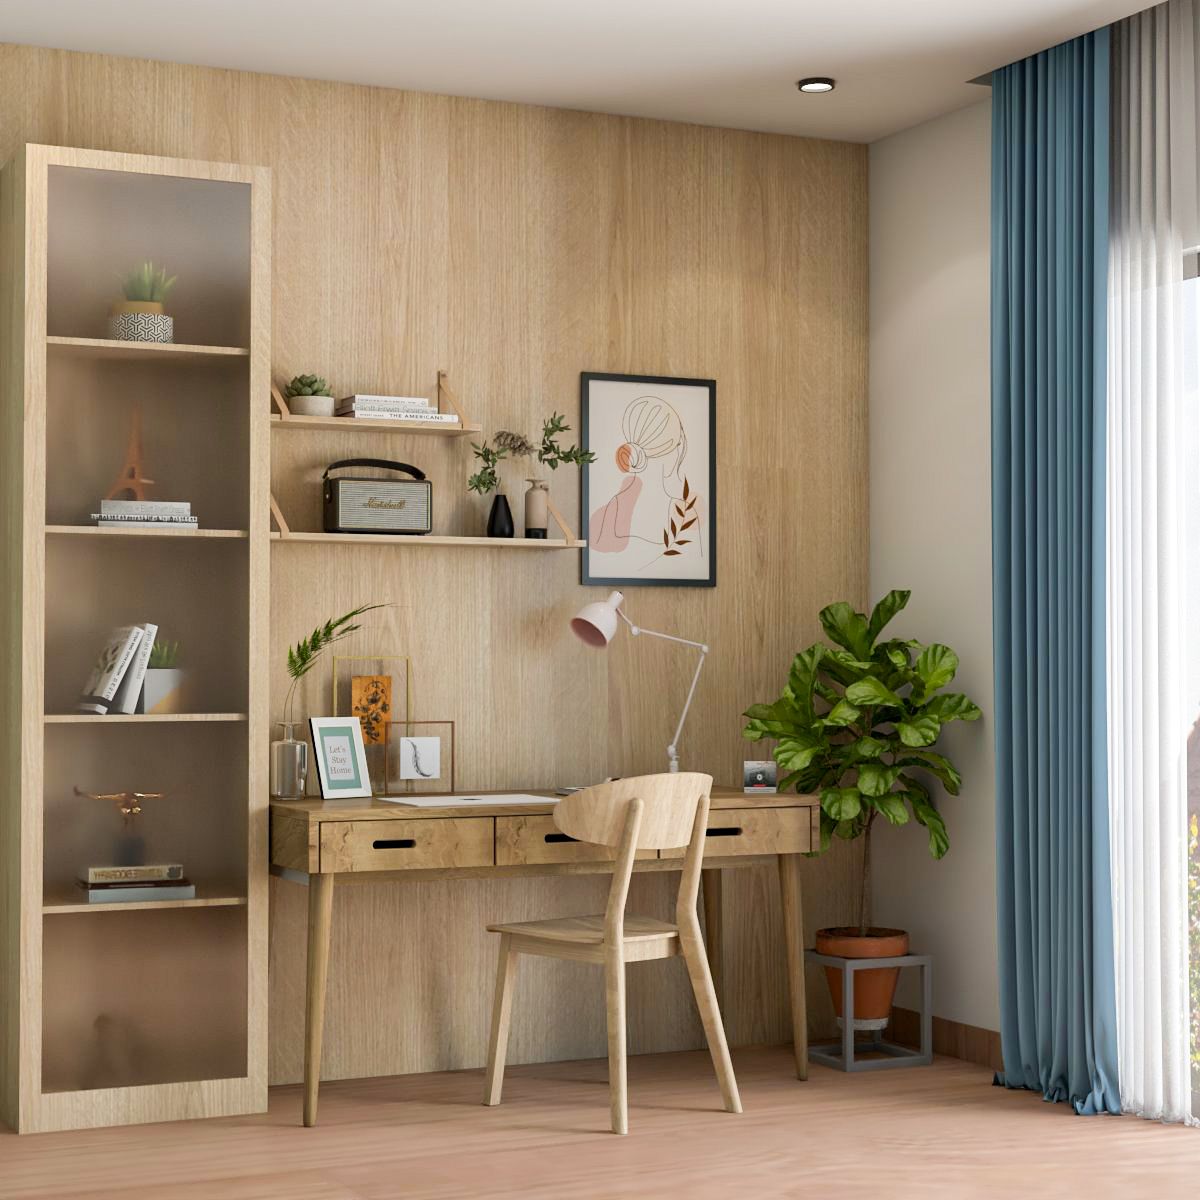 Scandinavian Home Office Design With Bookshelf And Open Racks